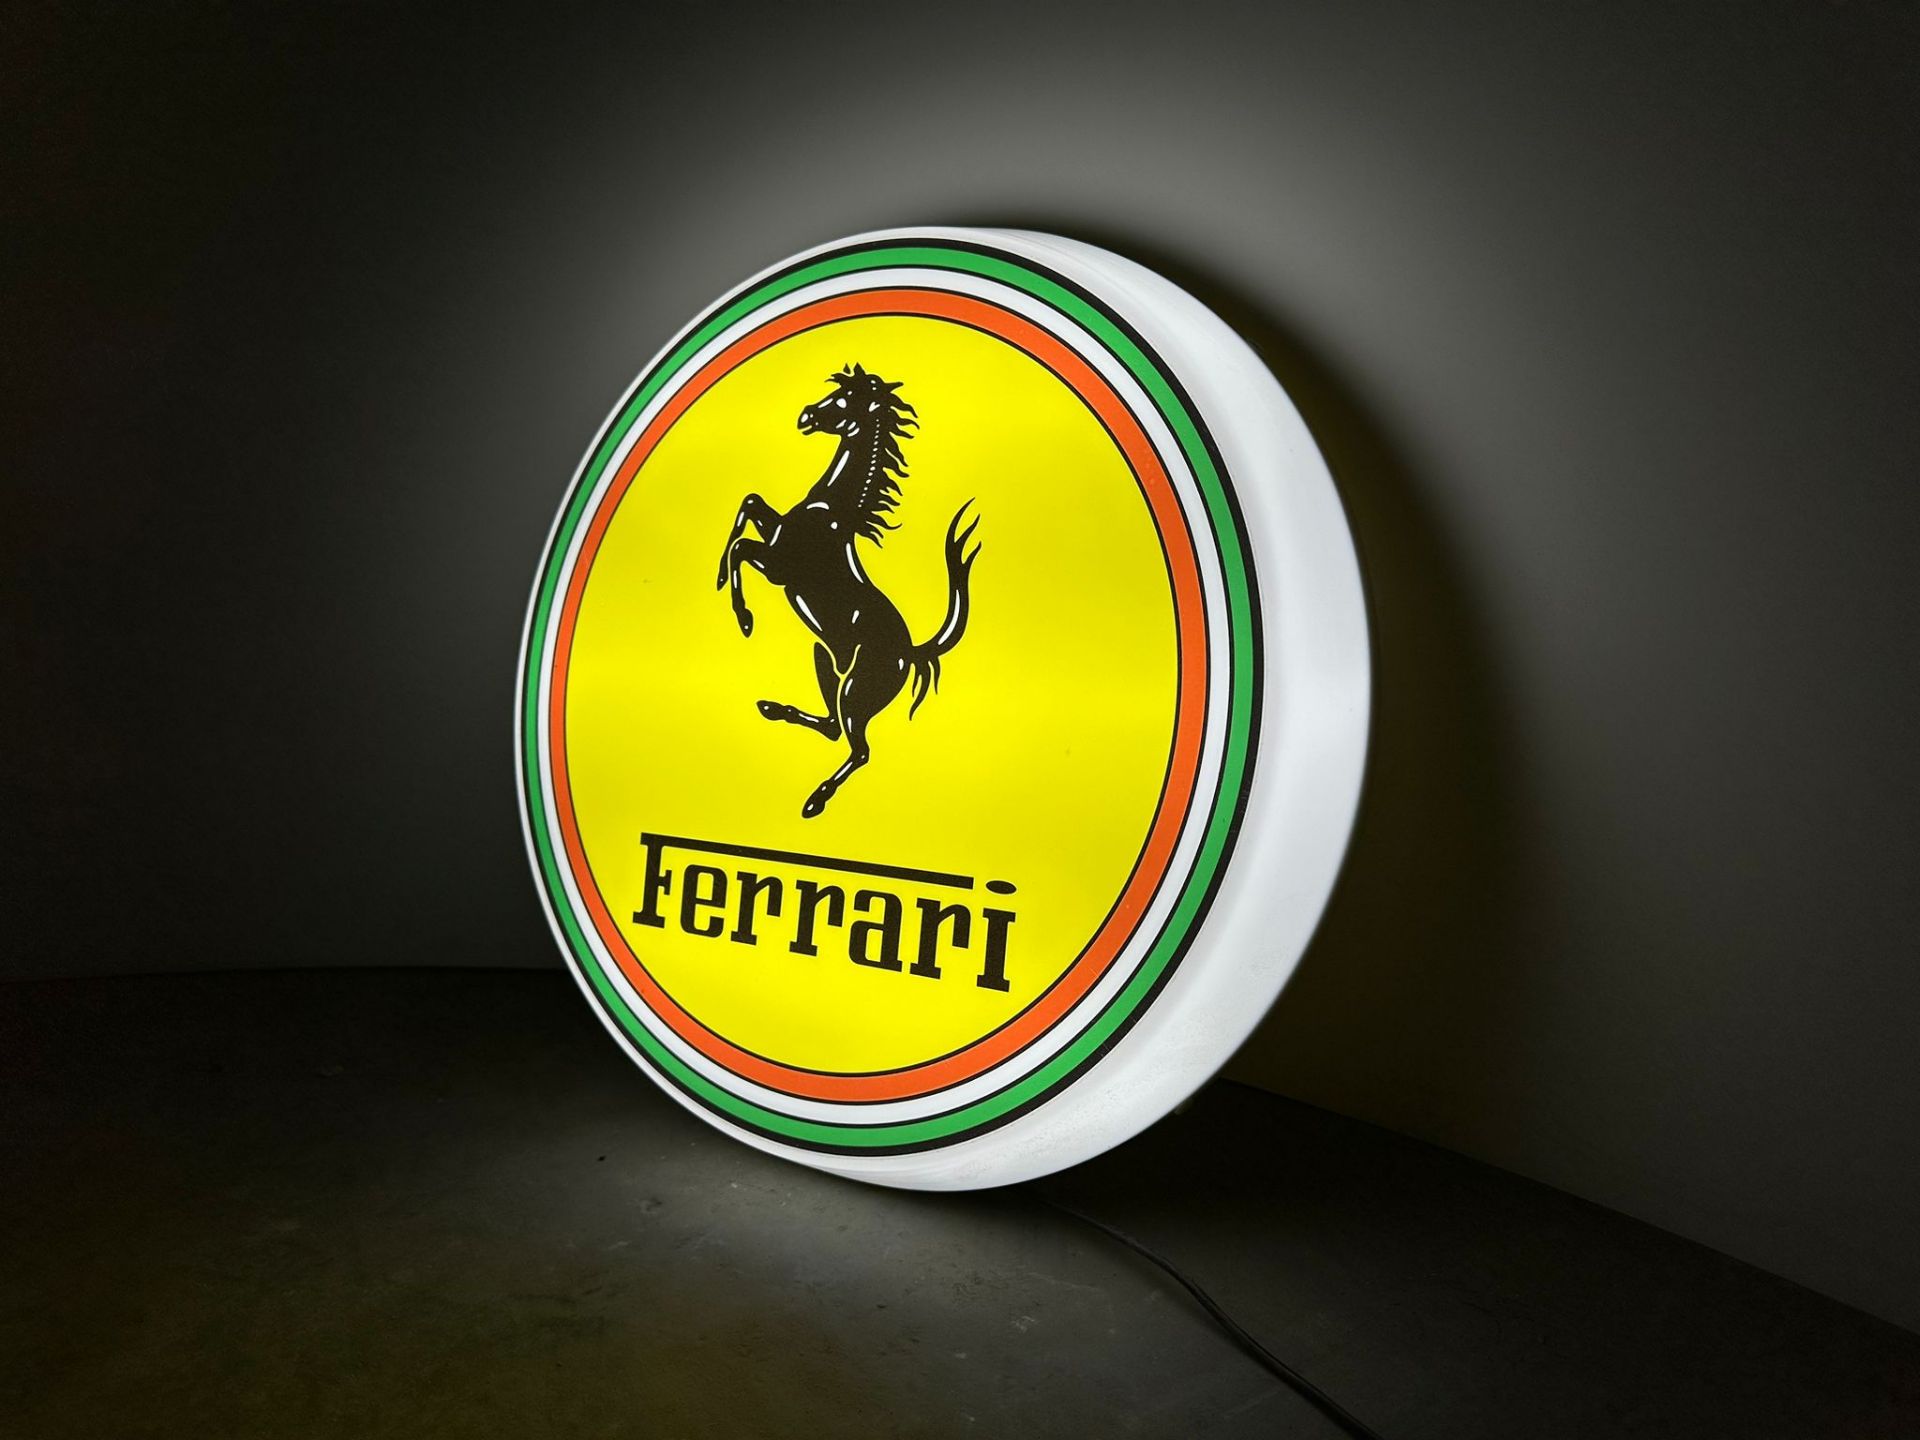 Ferrari fully working illuminated adapted to any country - Bild 6 aus 6